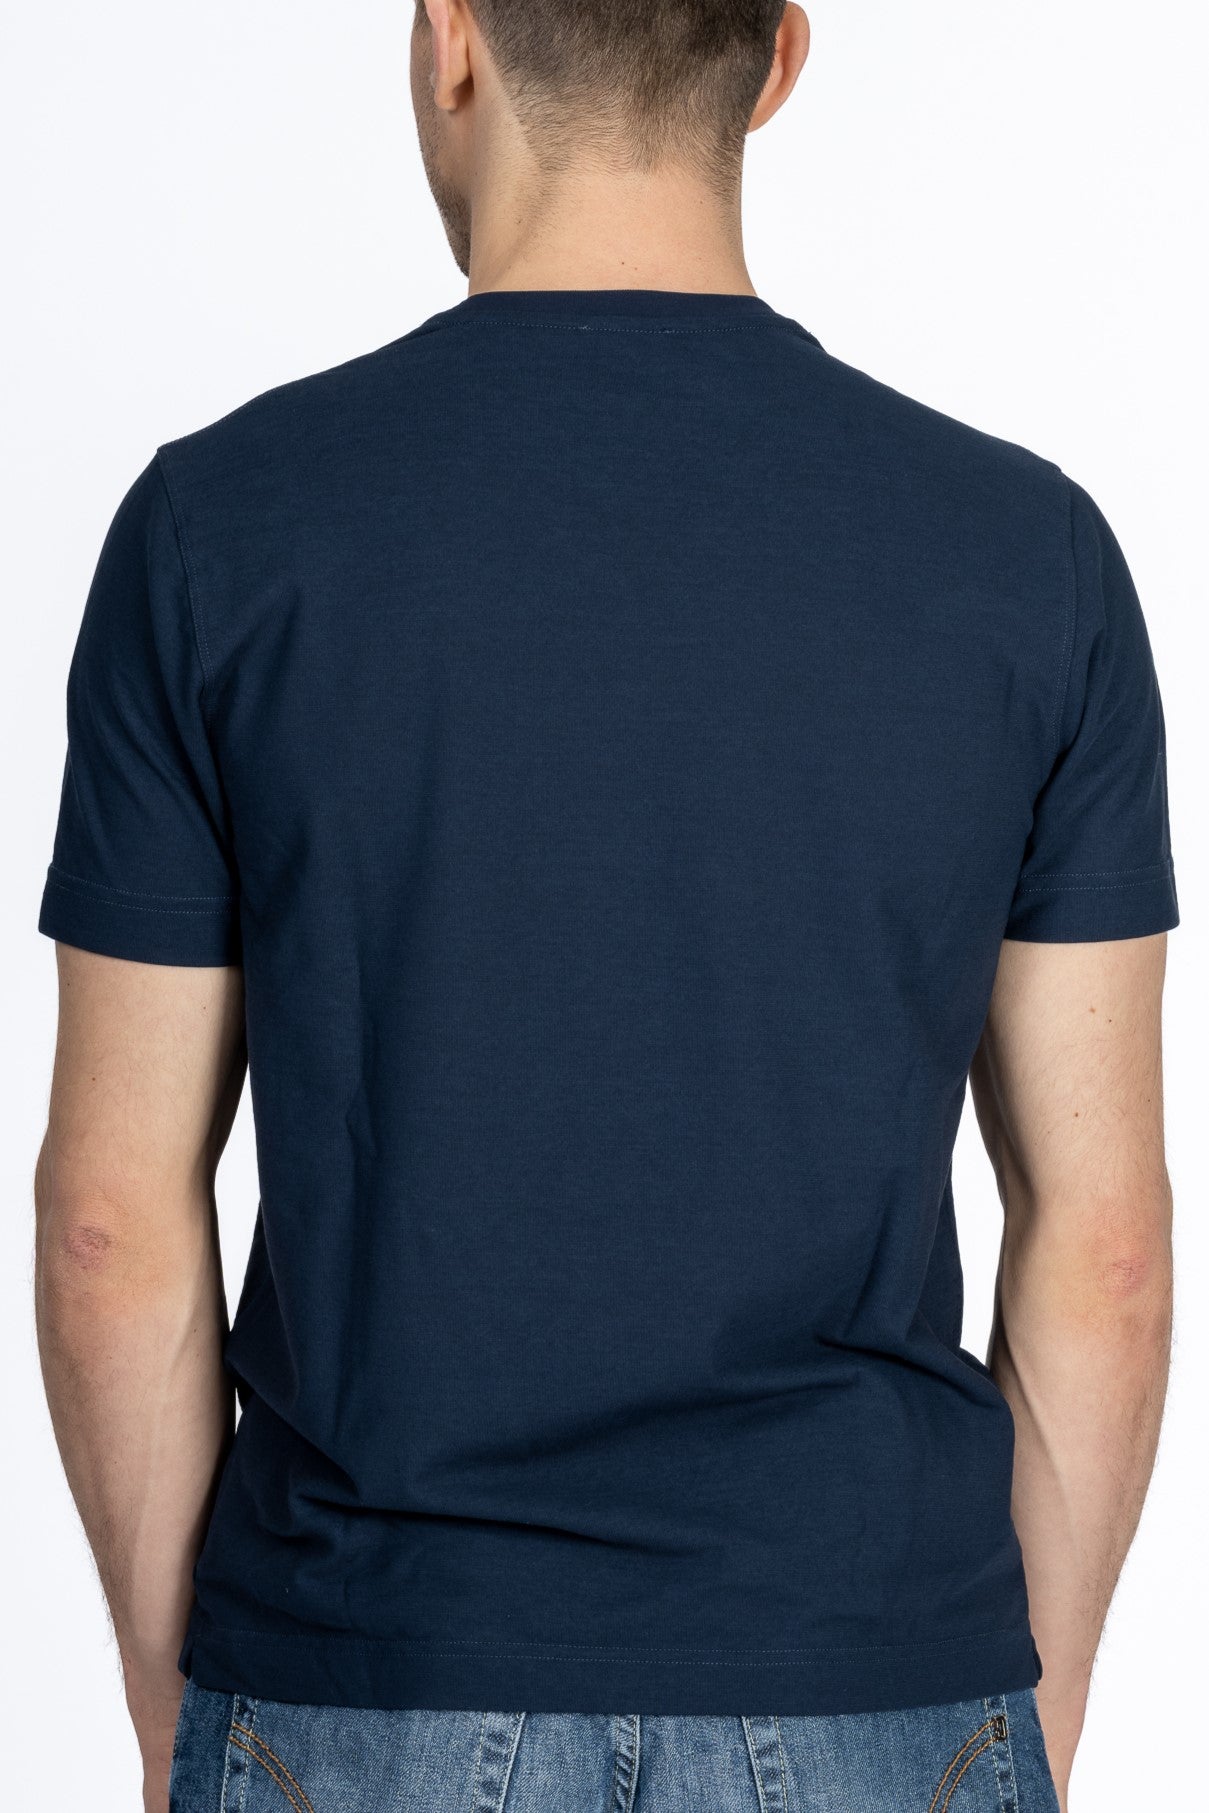 Zanone T-shirt Ice Cotton Blu Scuro Uomo-6